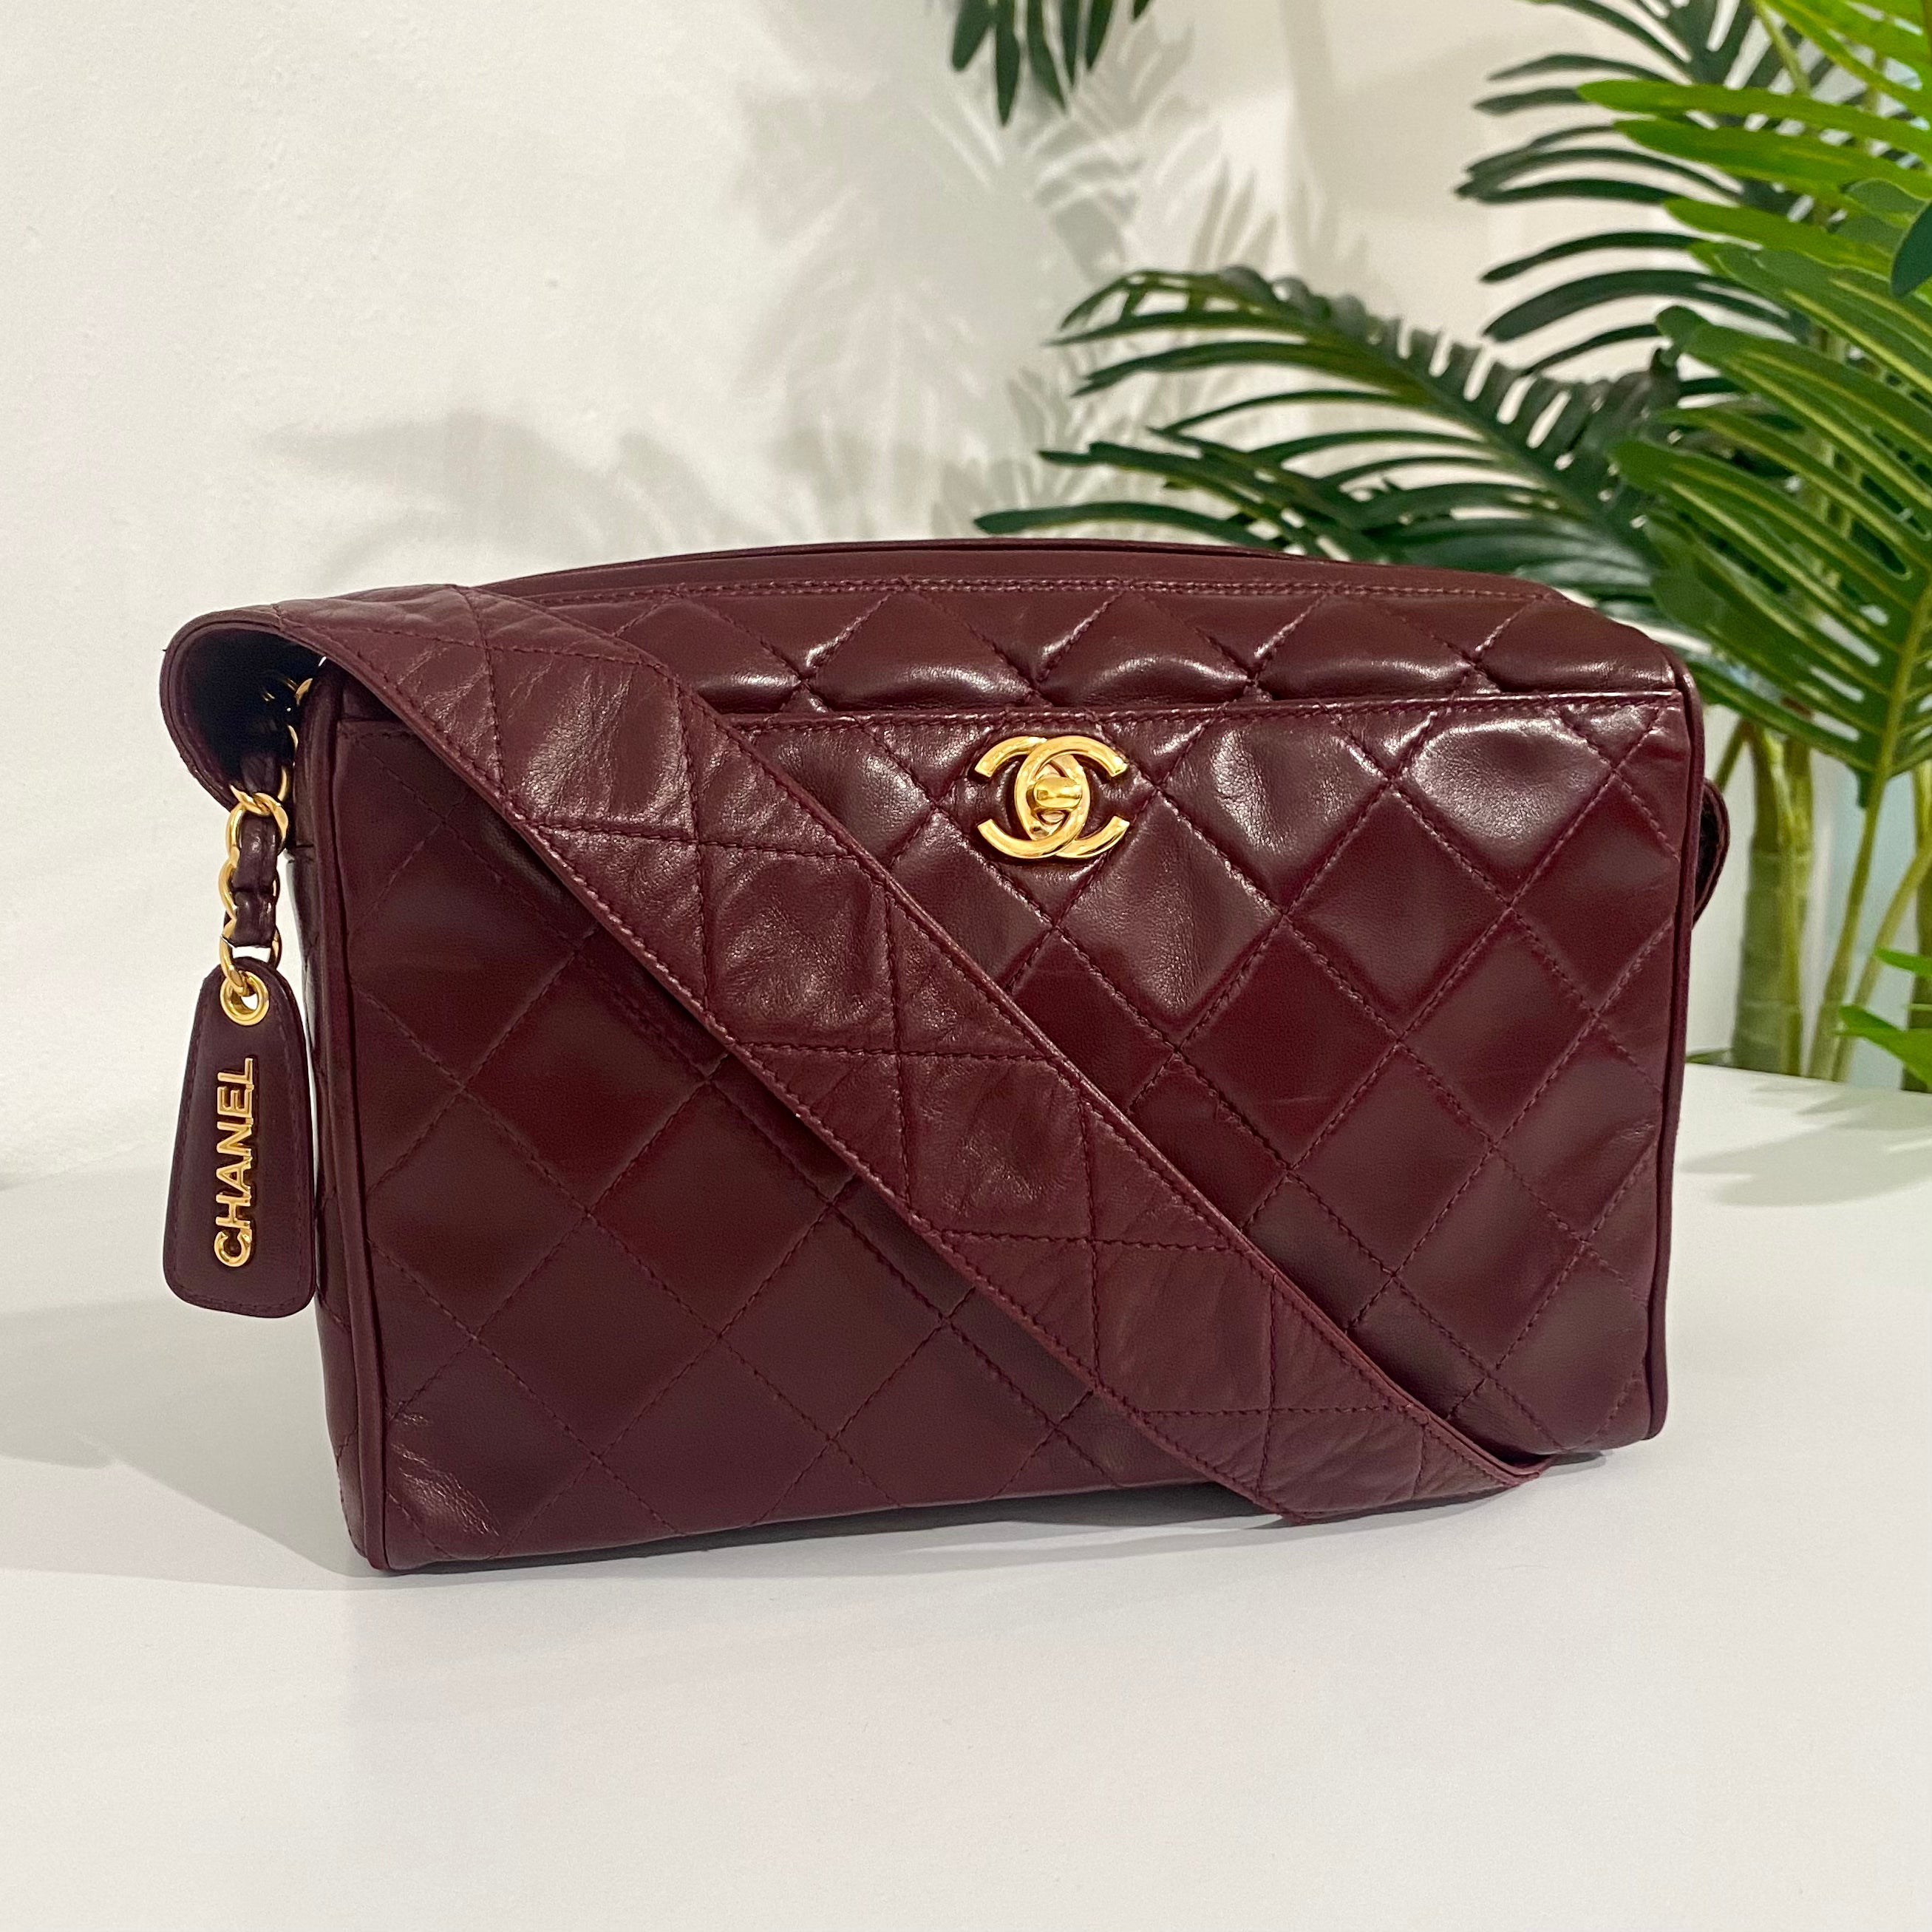 CHANEL, Bags, Chanel Rare Vintage Black Satin Leather Sequin Tassel Bag  Clutch Real Gold Hw